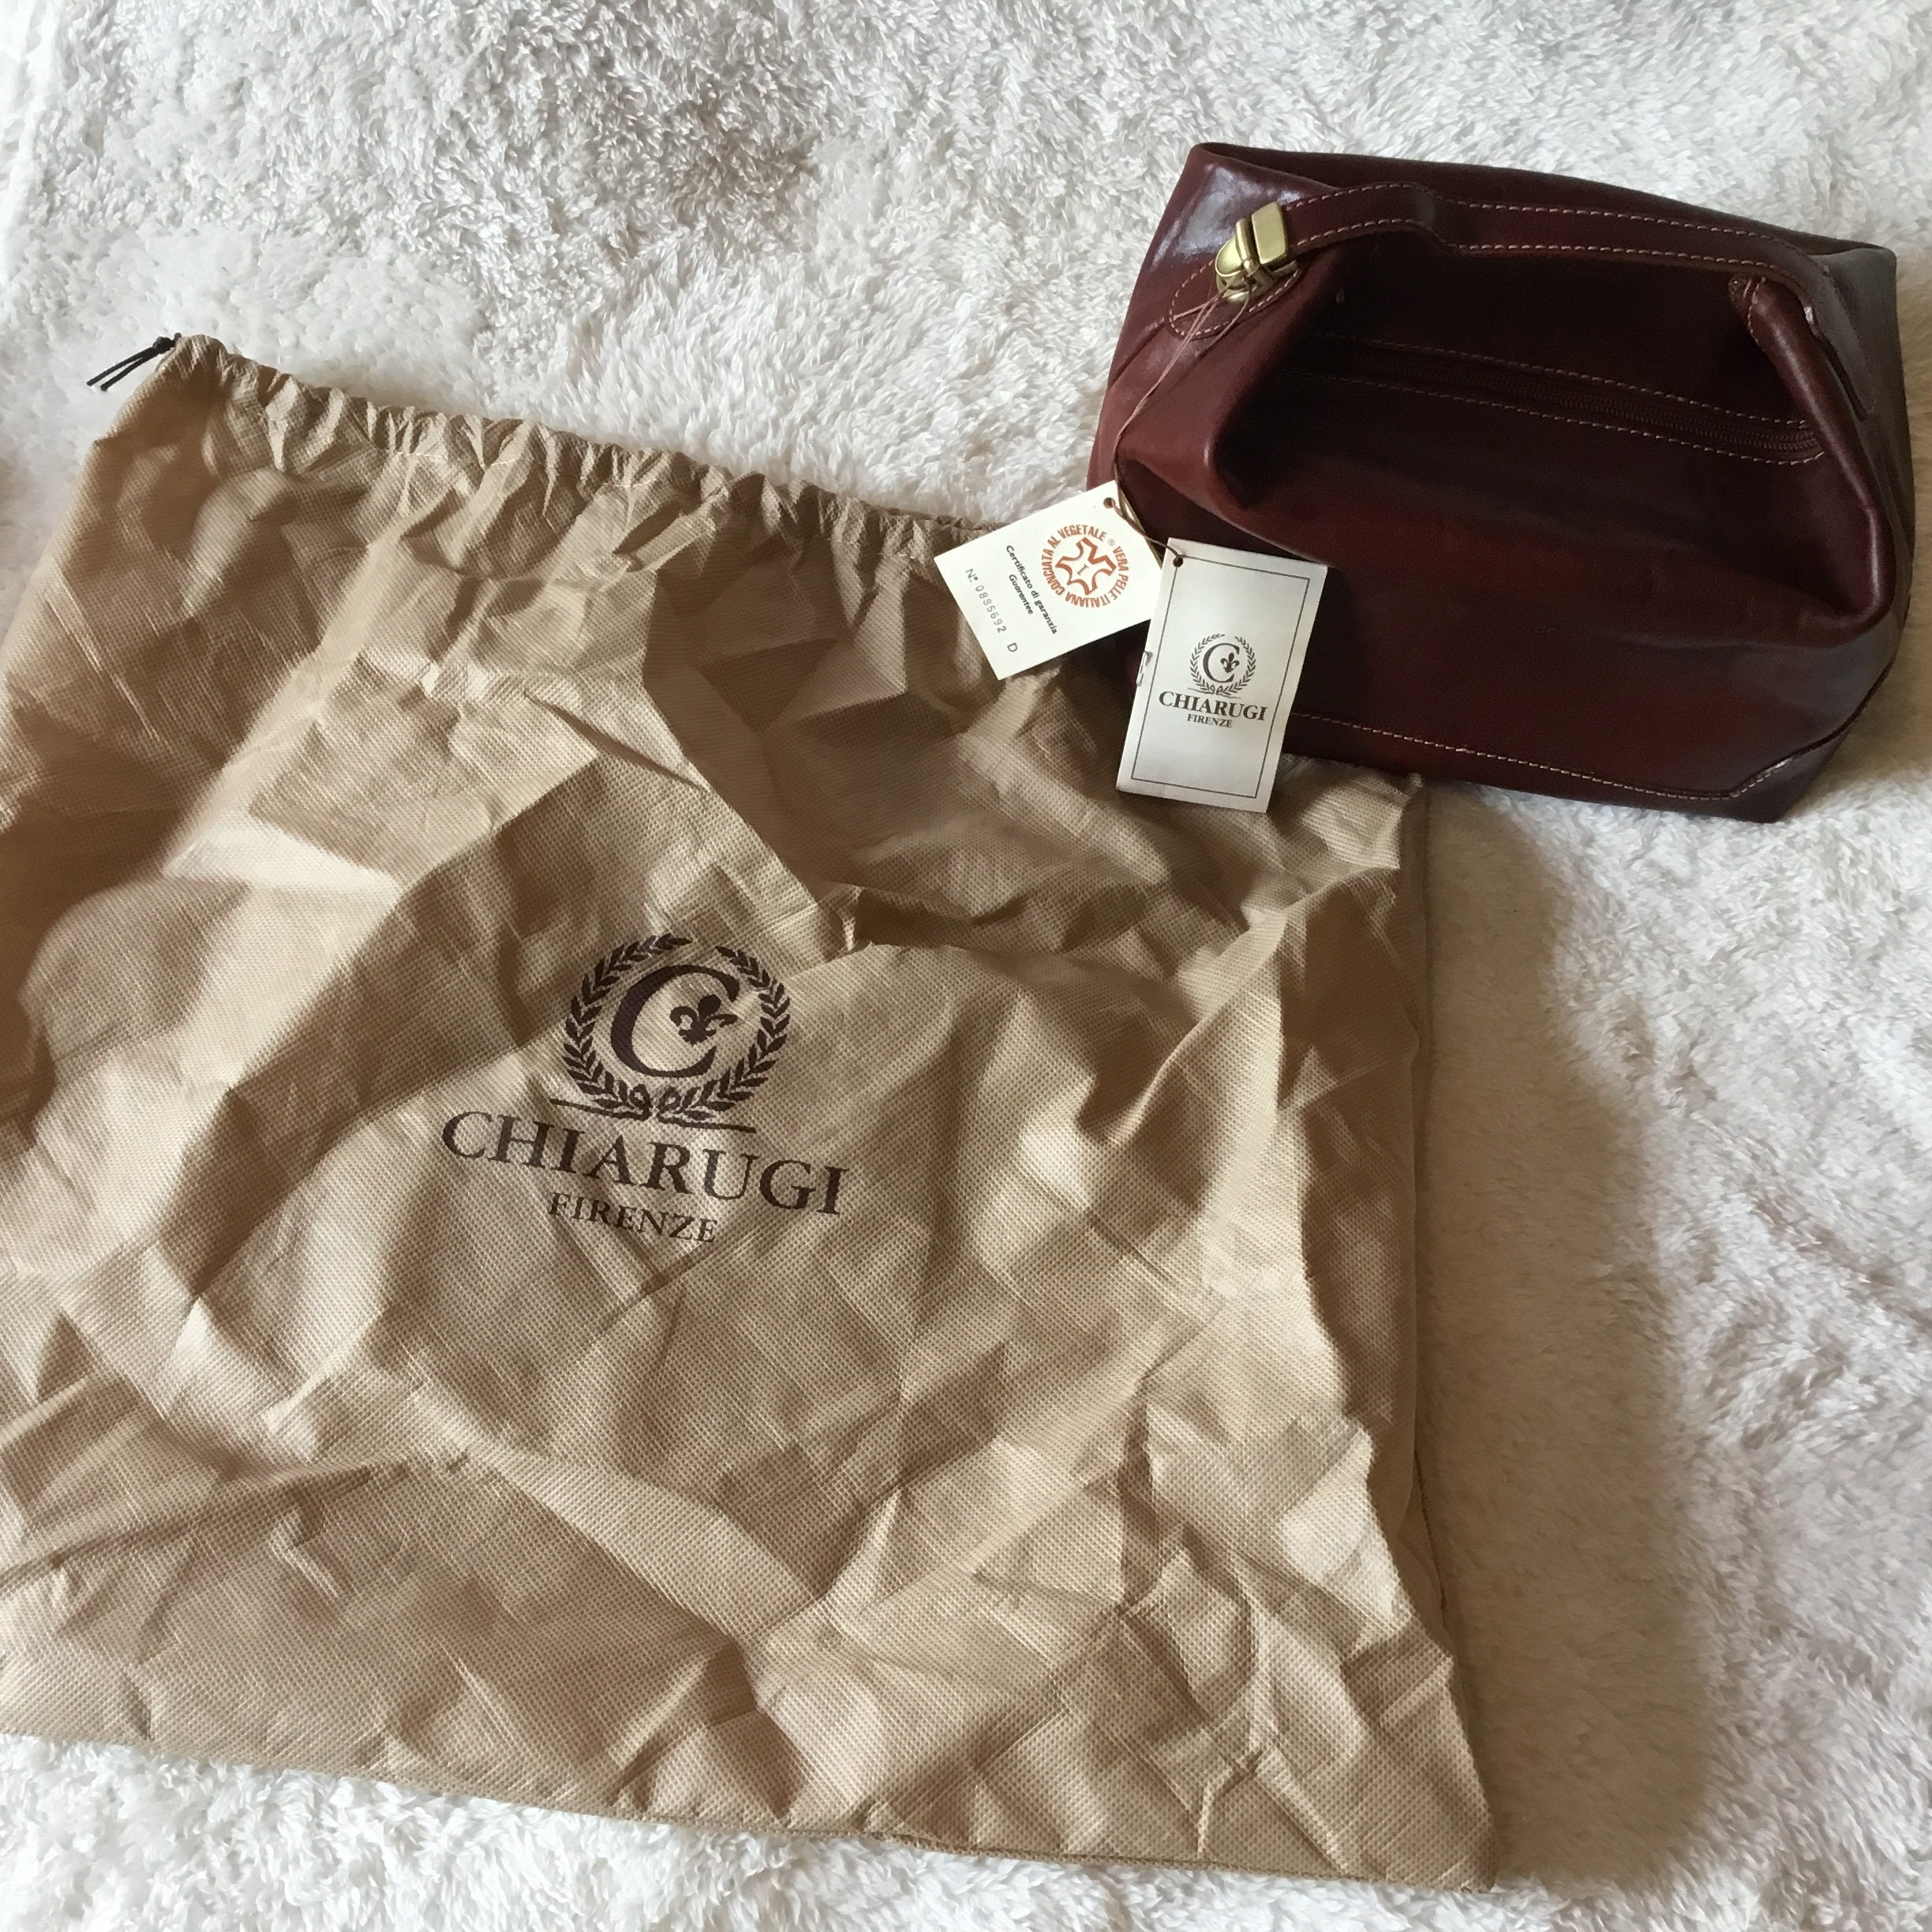 Chiarugi Pro Staff 9.5 Genuine Italian Leather Golf Bag at FORZIERI